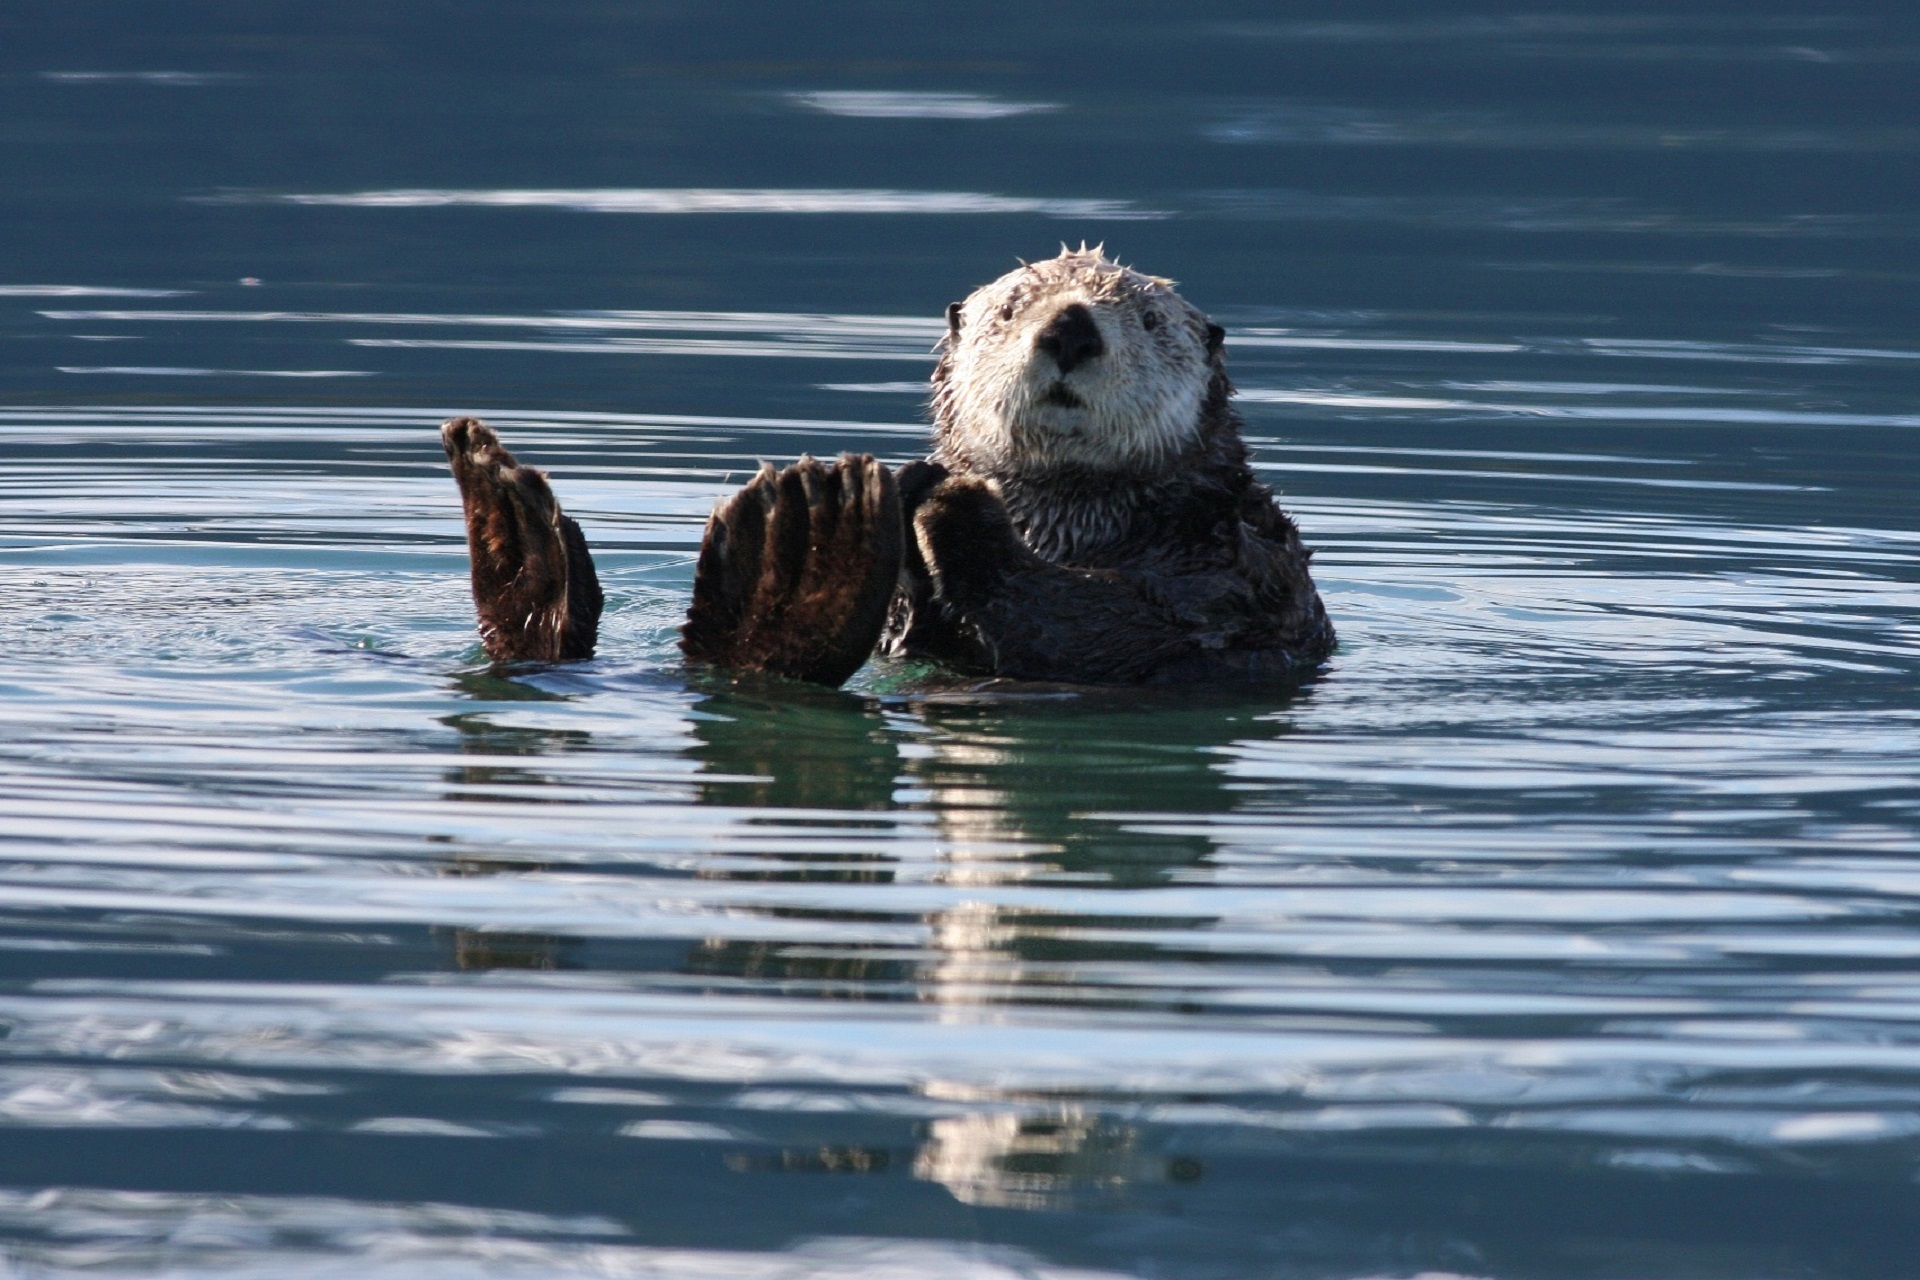 Sea otter photo